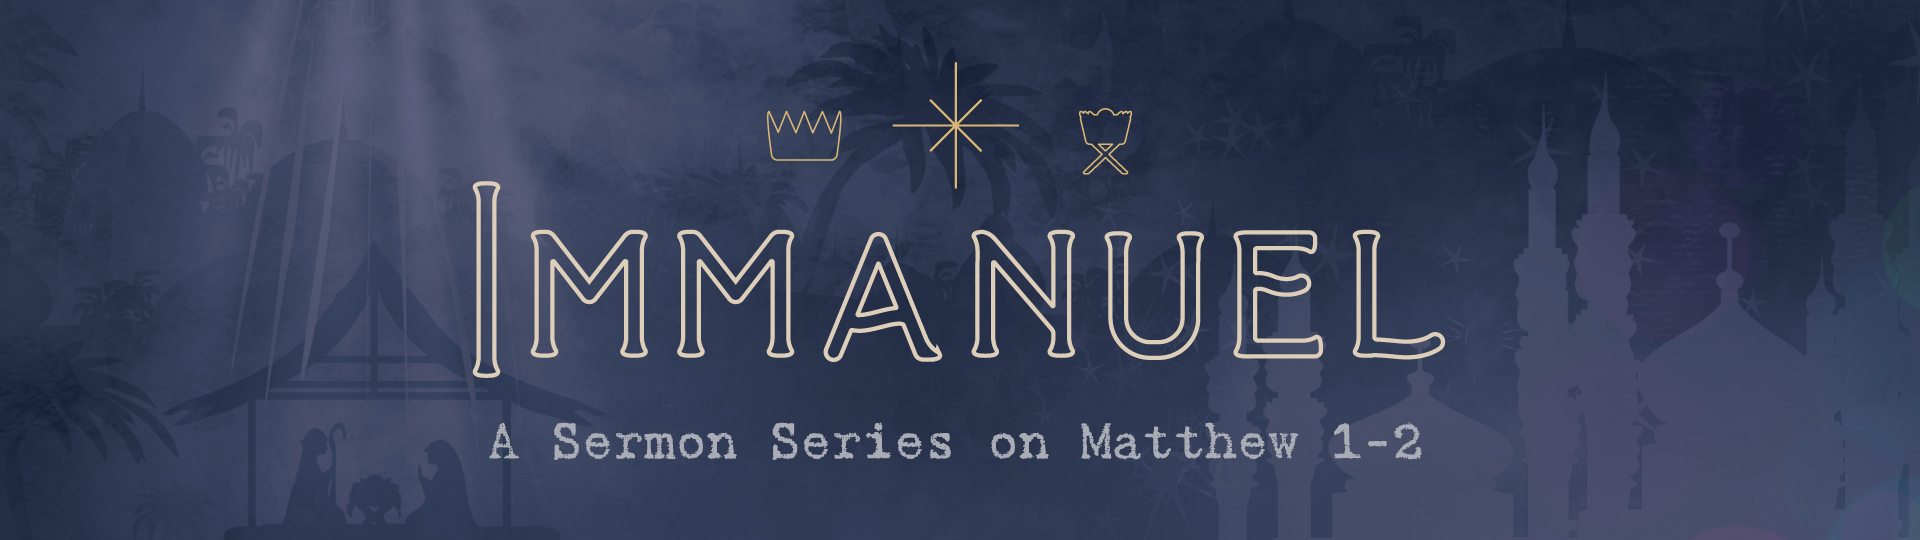 Immanuel - A Sermon Series on Matthew 1-2